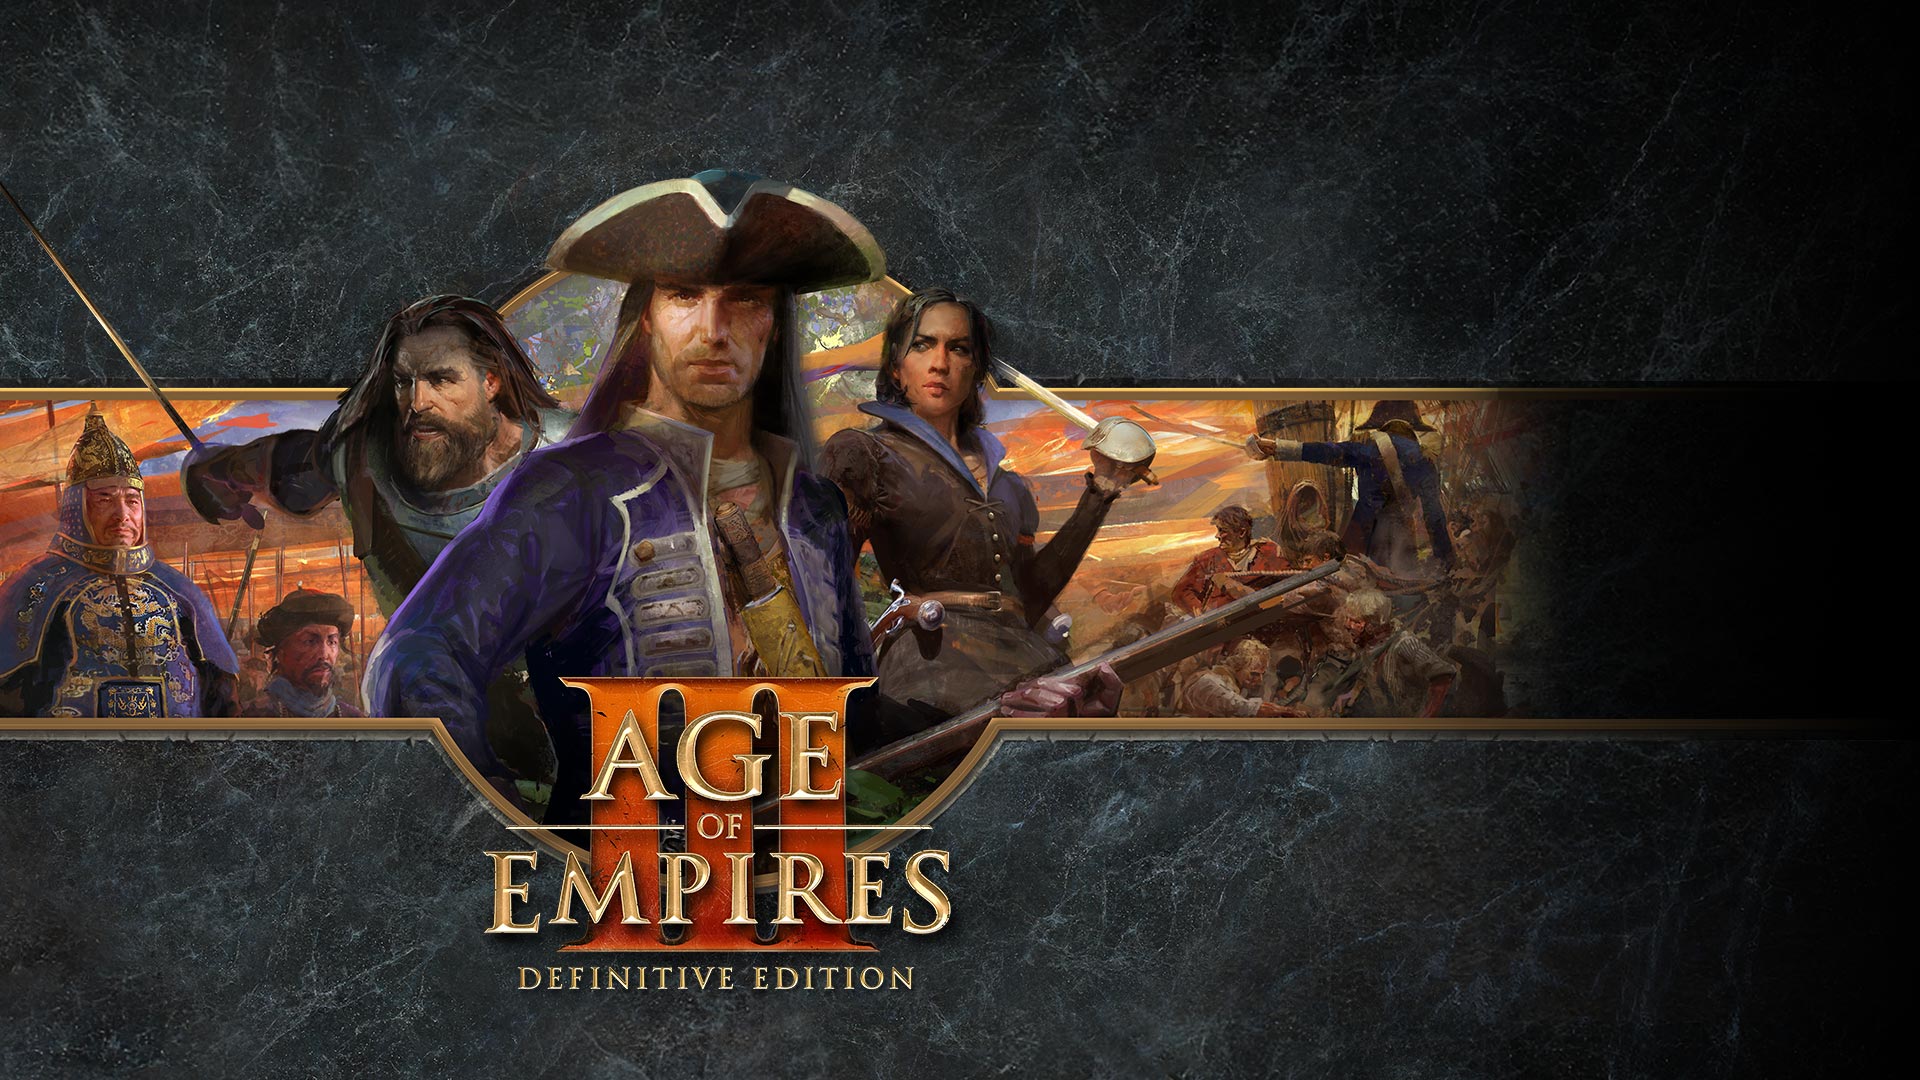 Age of Empires III: Definitive Edition, personajes posando